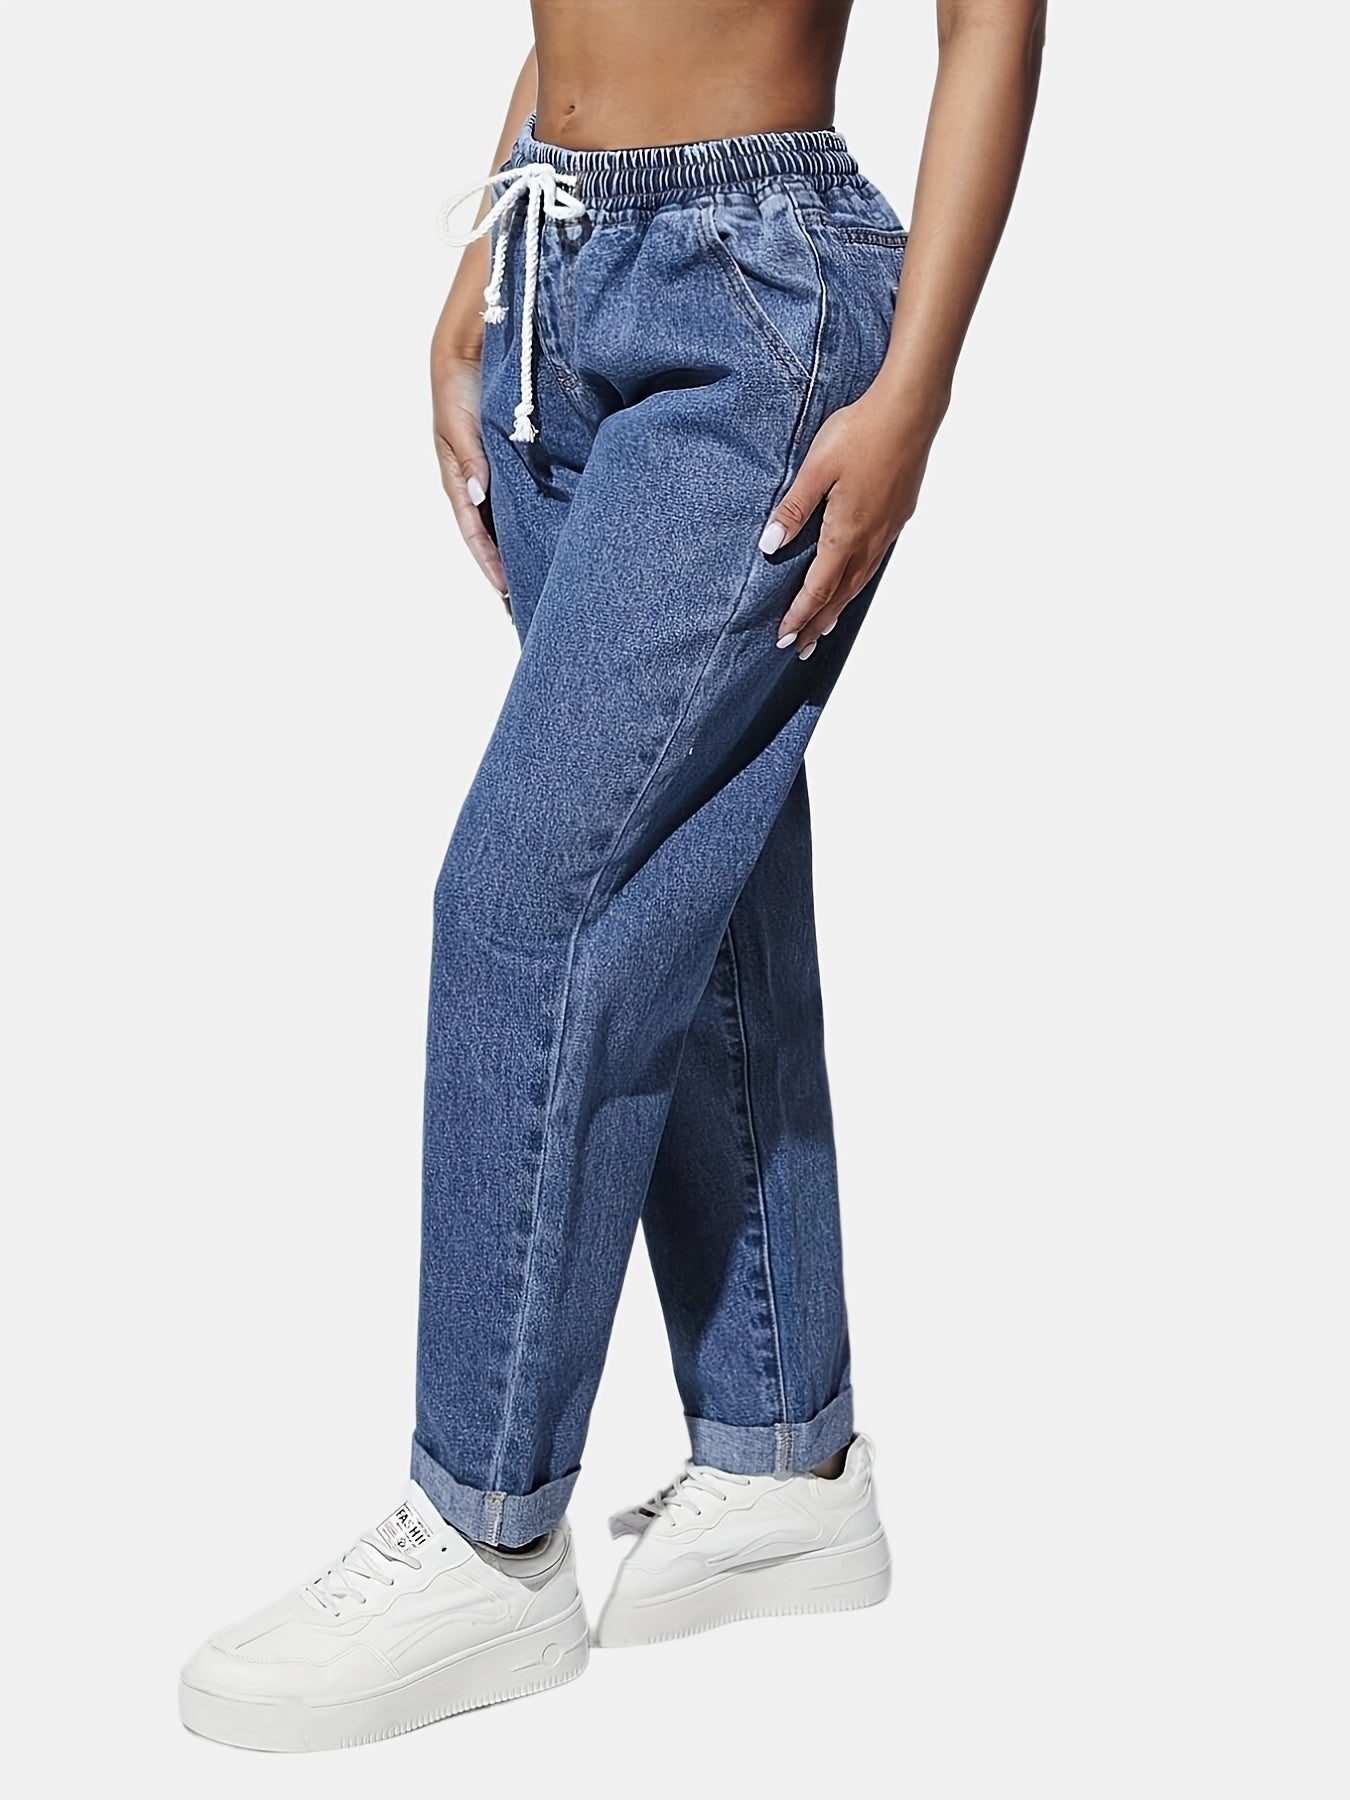 「lovevop」Blue Elastic Waist Straight Jeans, Loose Fit Slash Pockets Drawstring Denim Pants, Women's Denim Jeans & Clothing